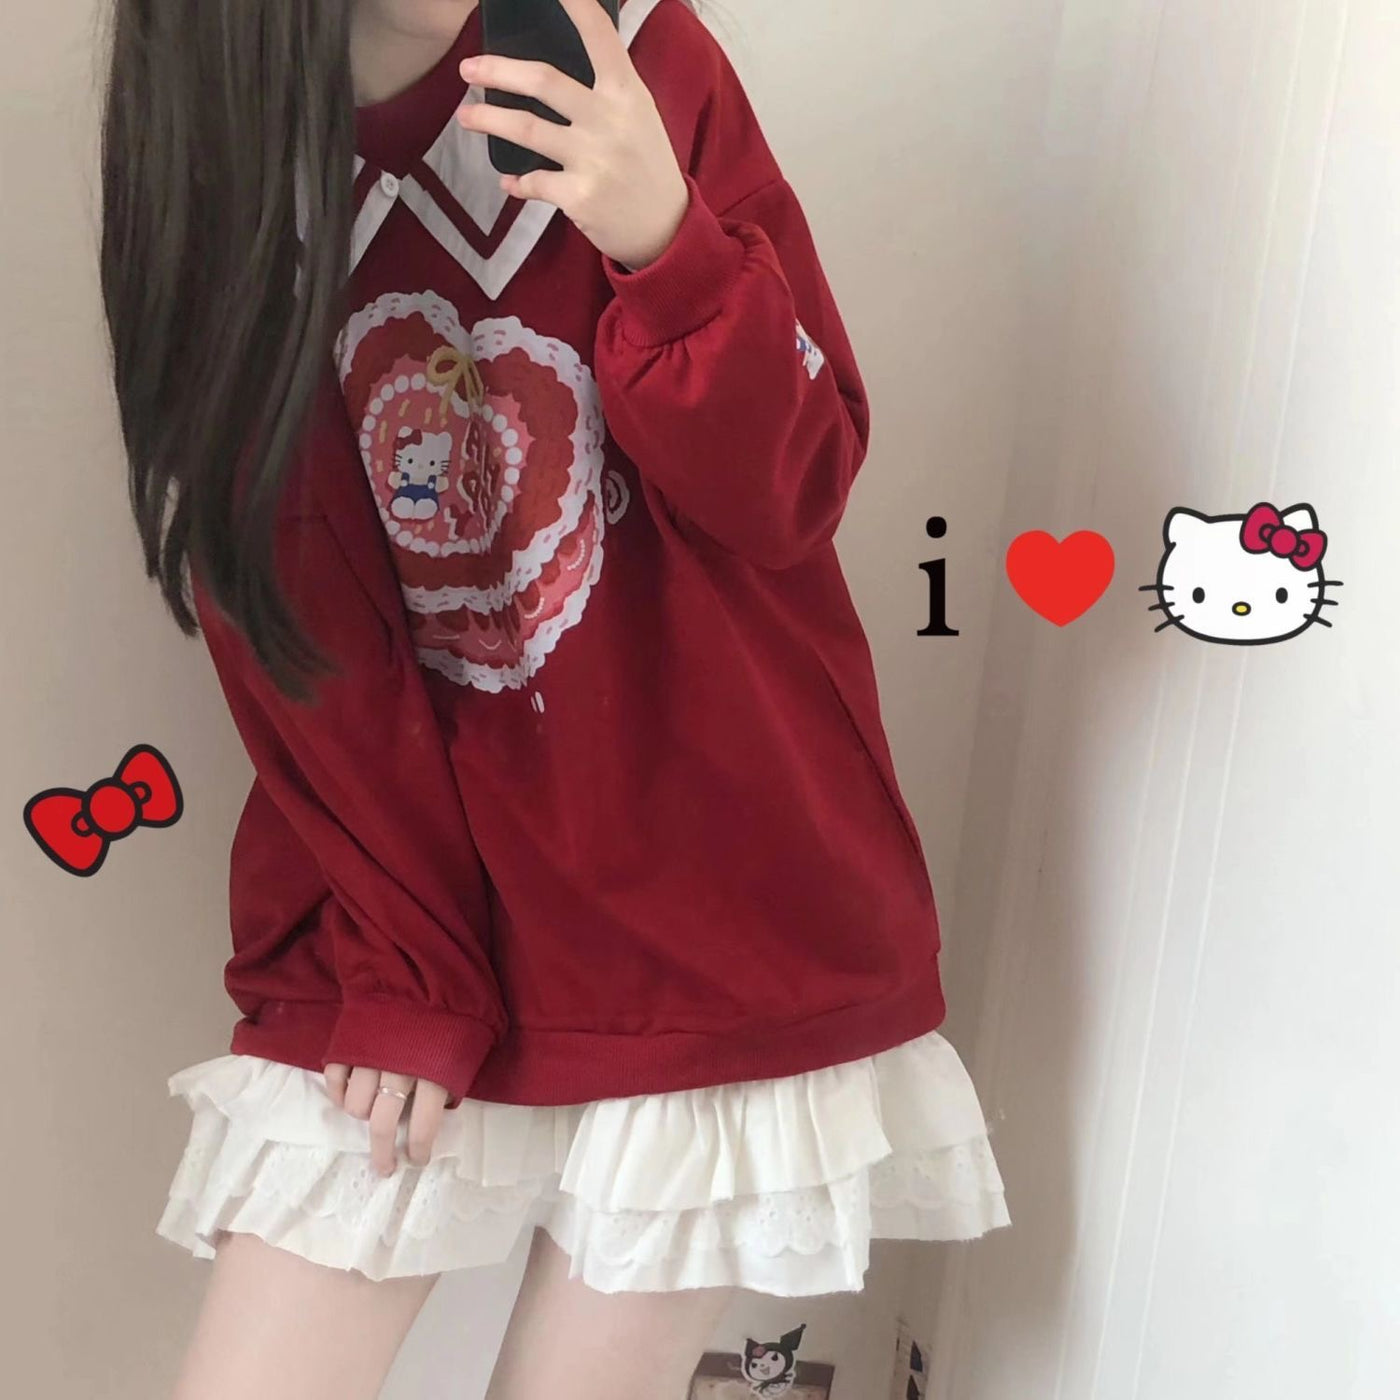 Soft Girl Hello Kitty Inspired Cotton Sweatshirt